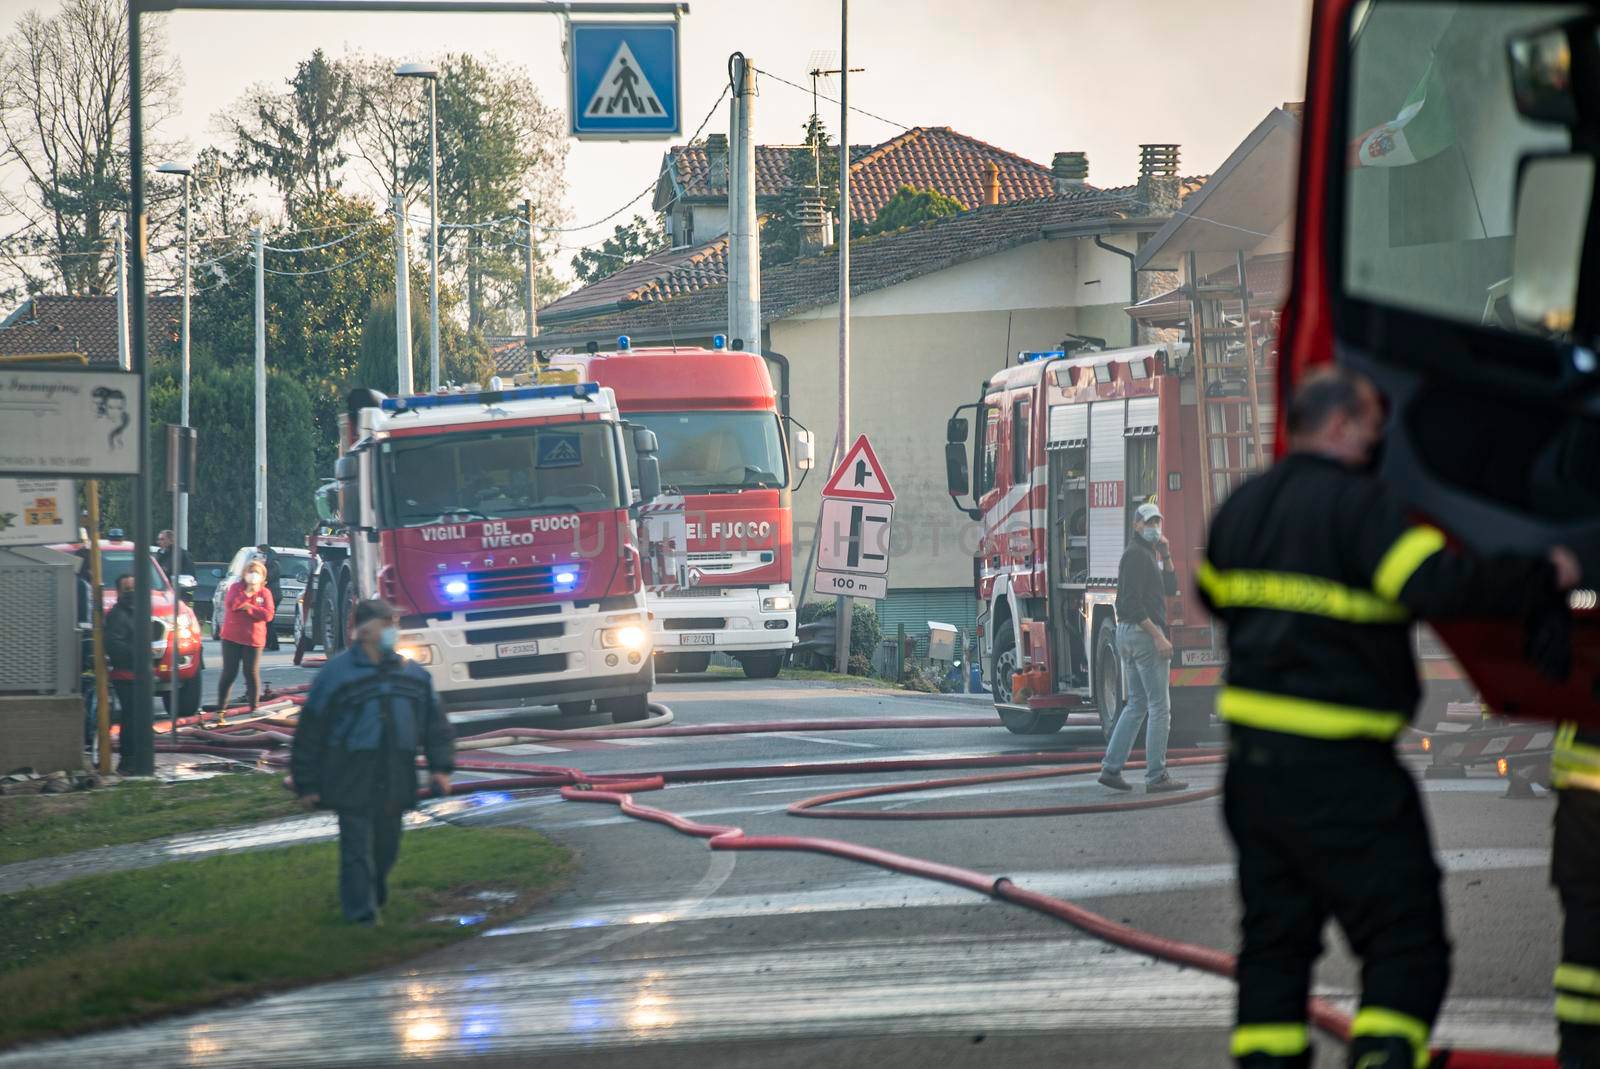 VILLANOVA DEL GHEBBO, ITALY 23 MARCH 2021: Italian Firefighters emergency